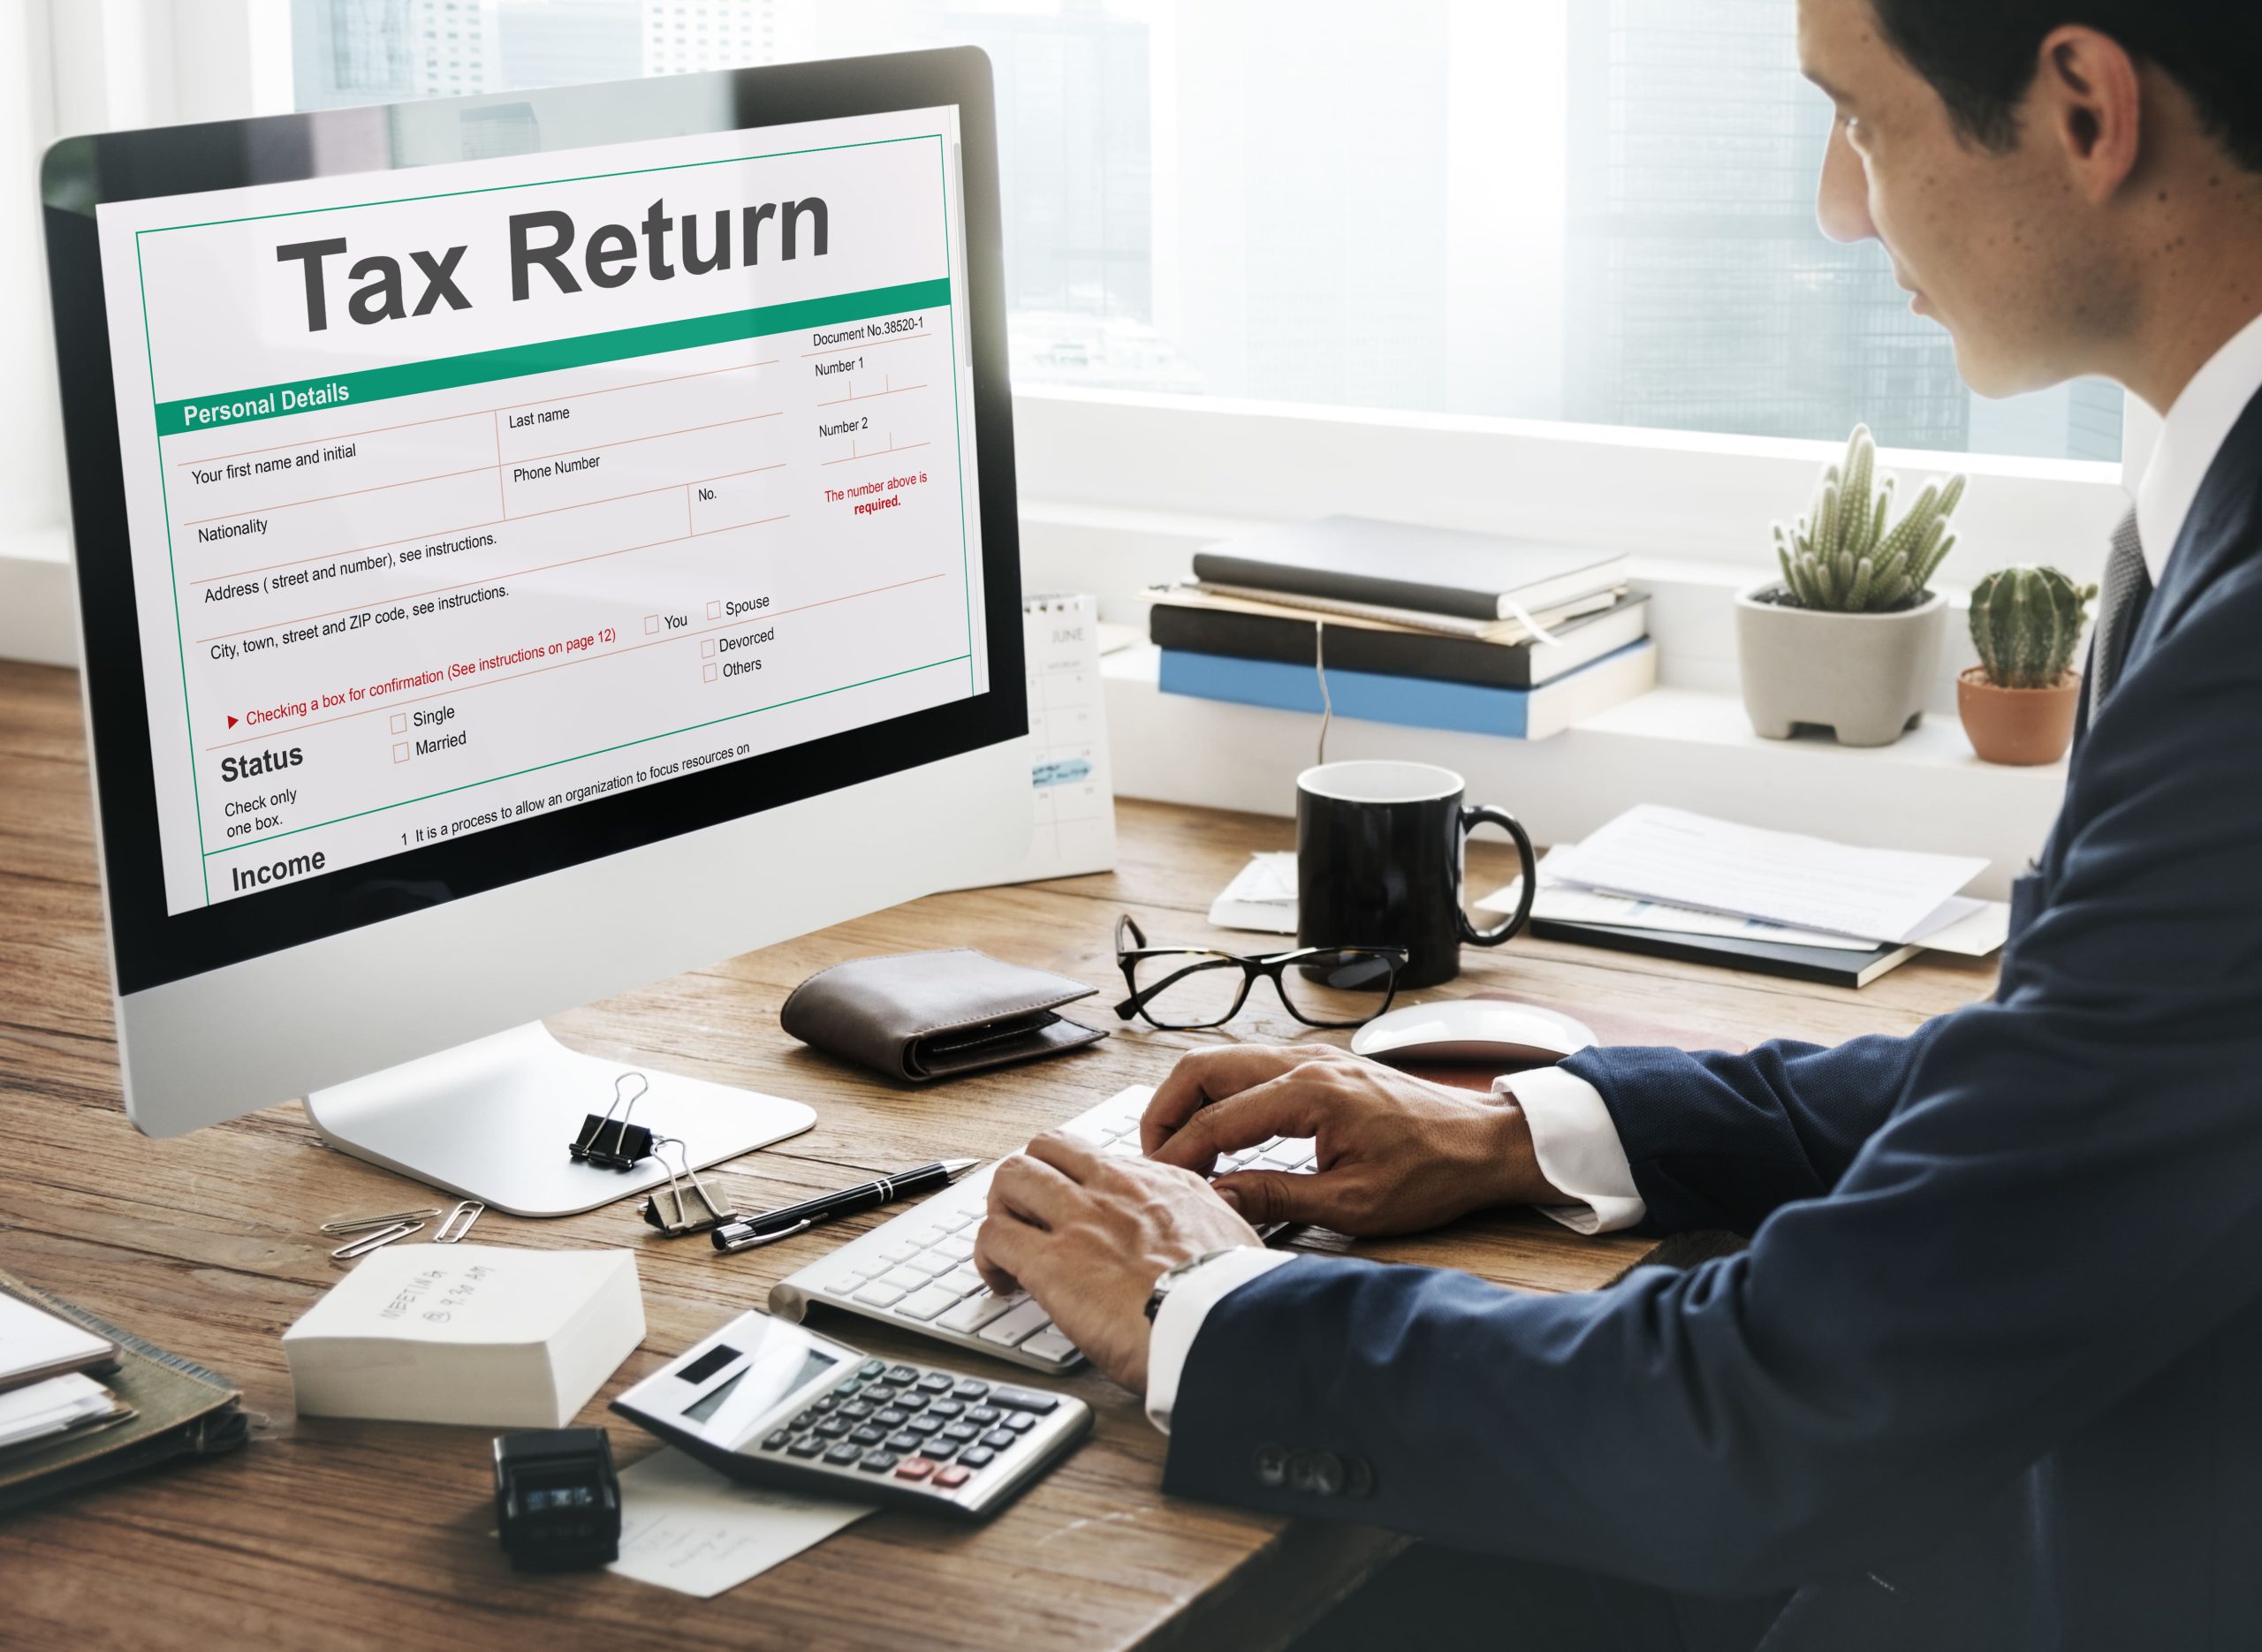 income-tax-return-deduction-refund-concept (1)